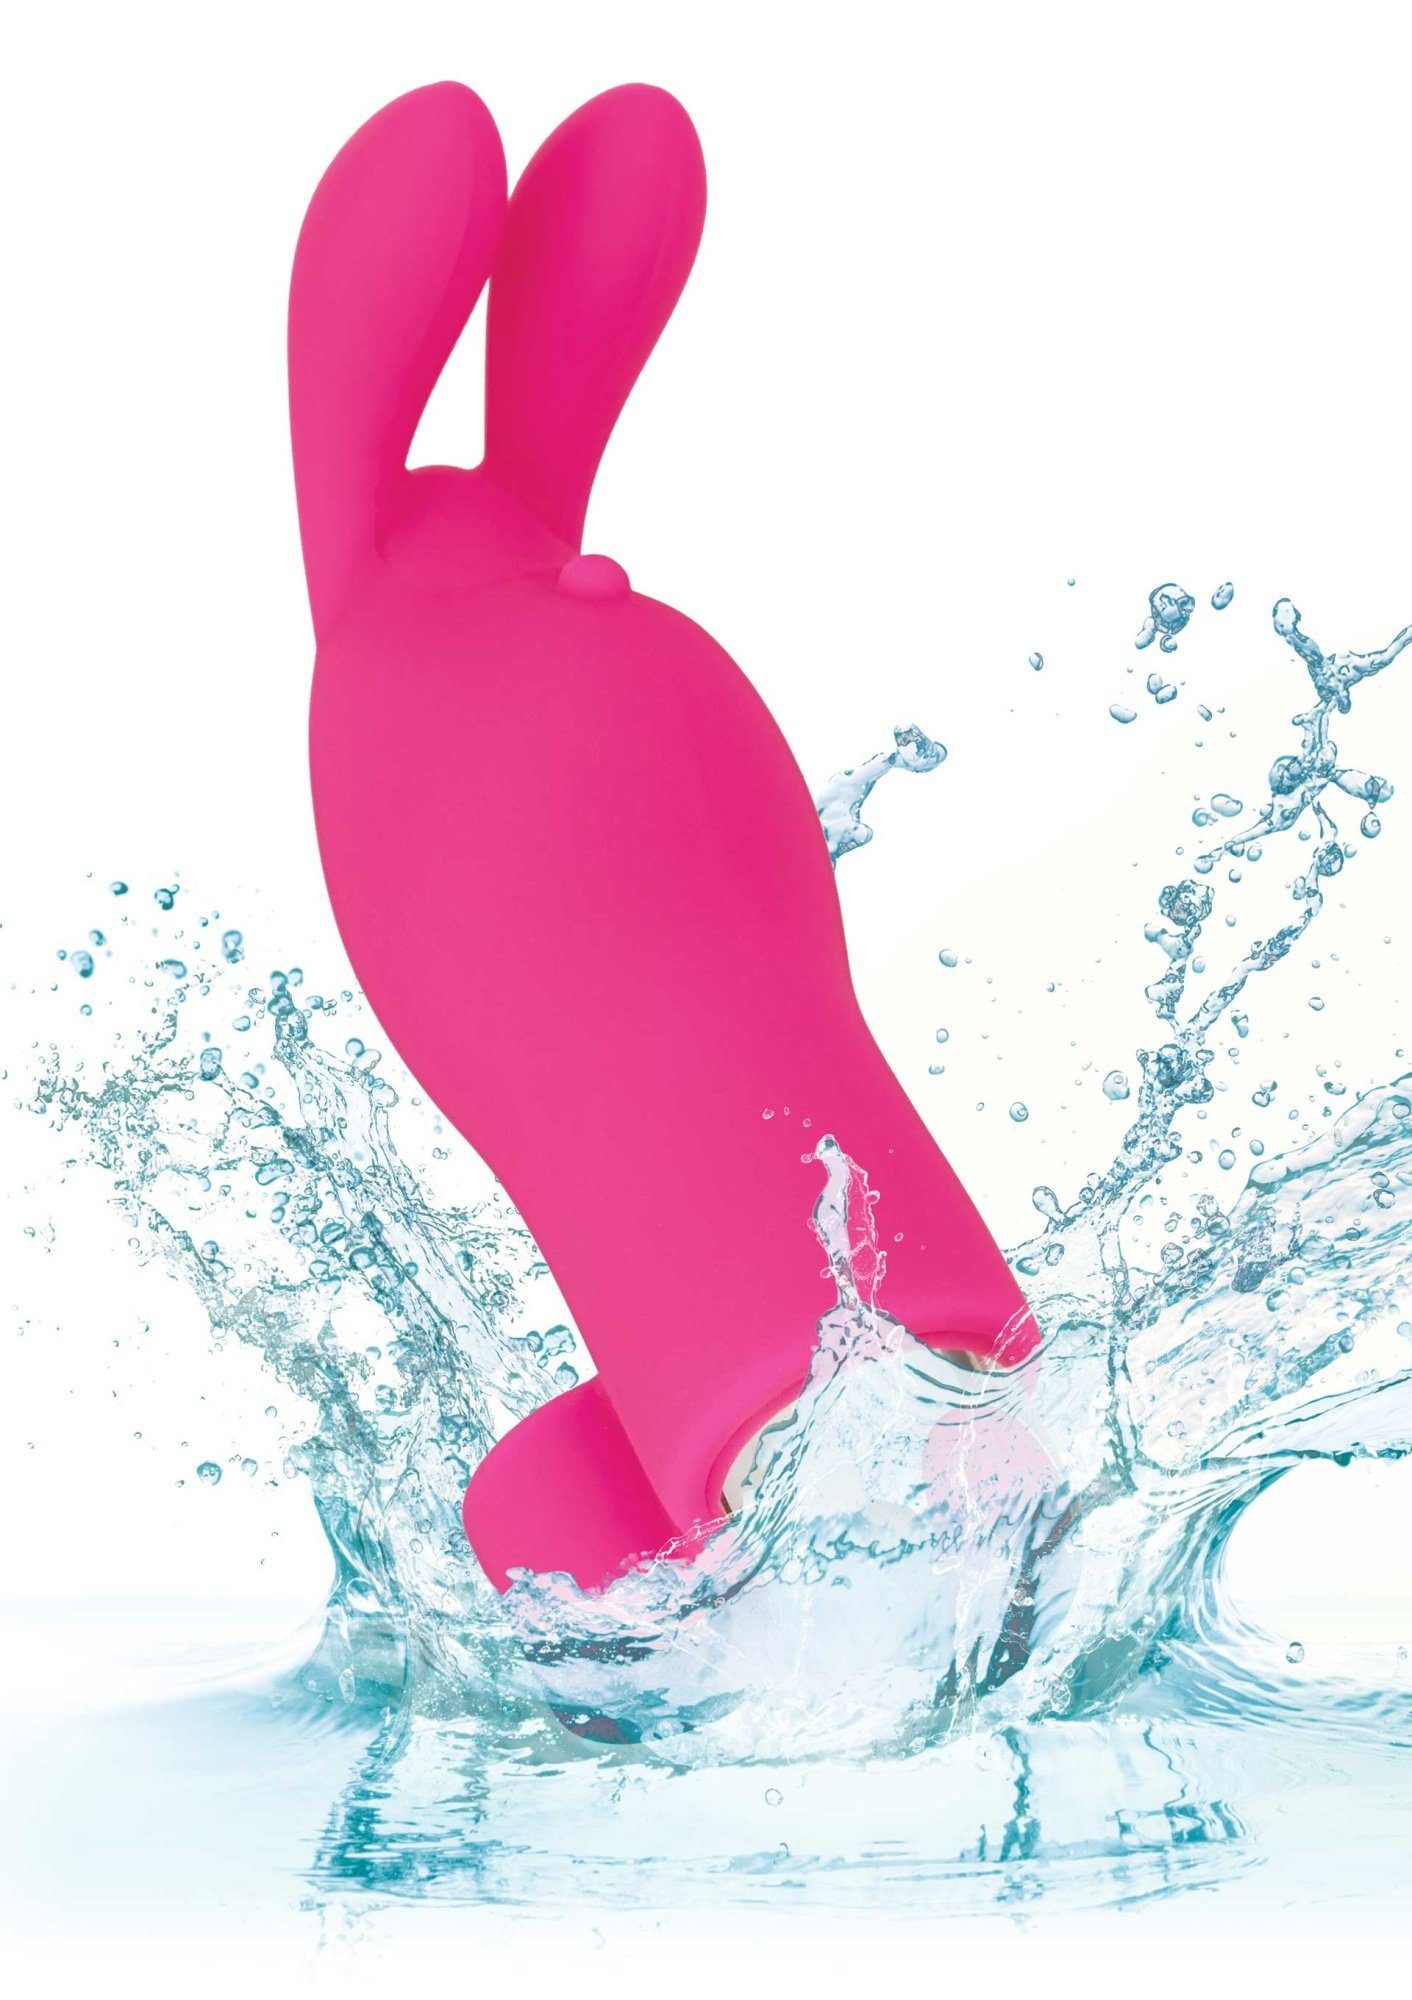 California pink - Exotic Finger Novelties Finger-Vibrator Bunny Vibrator Rechargeable